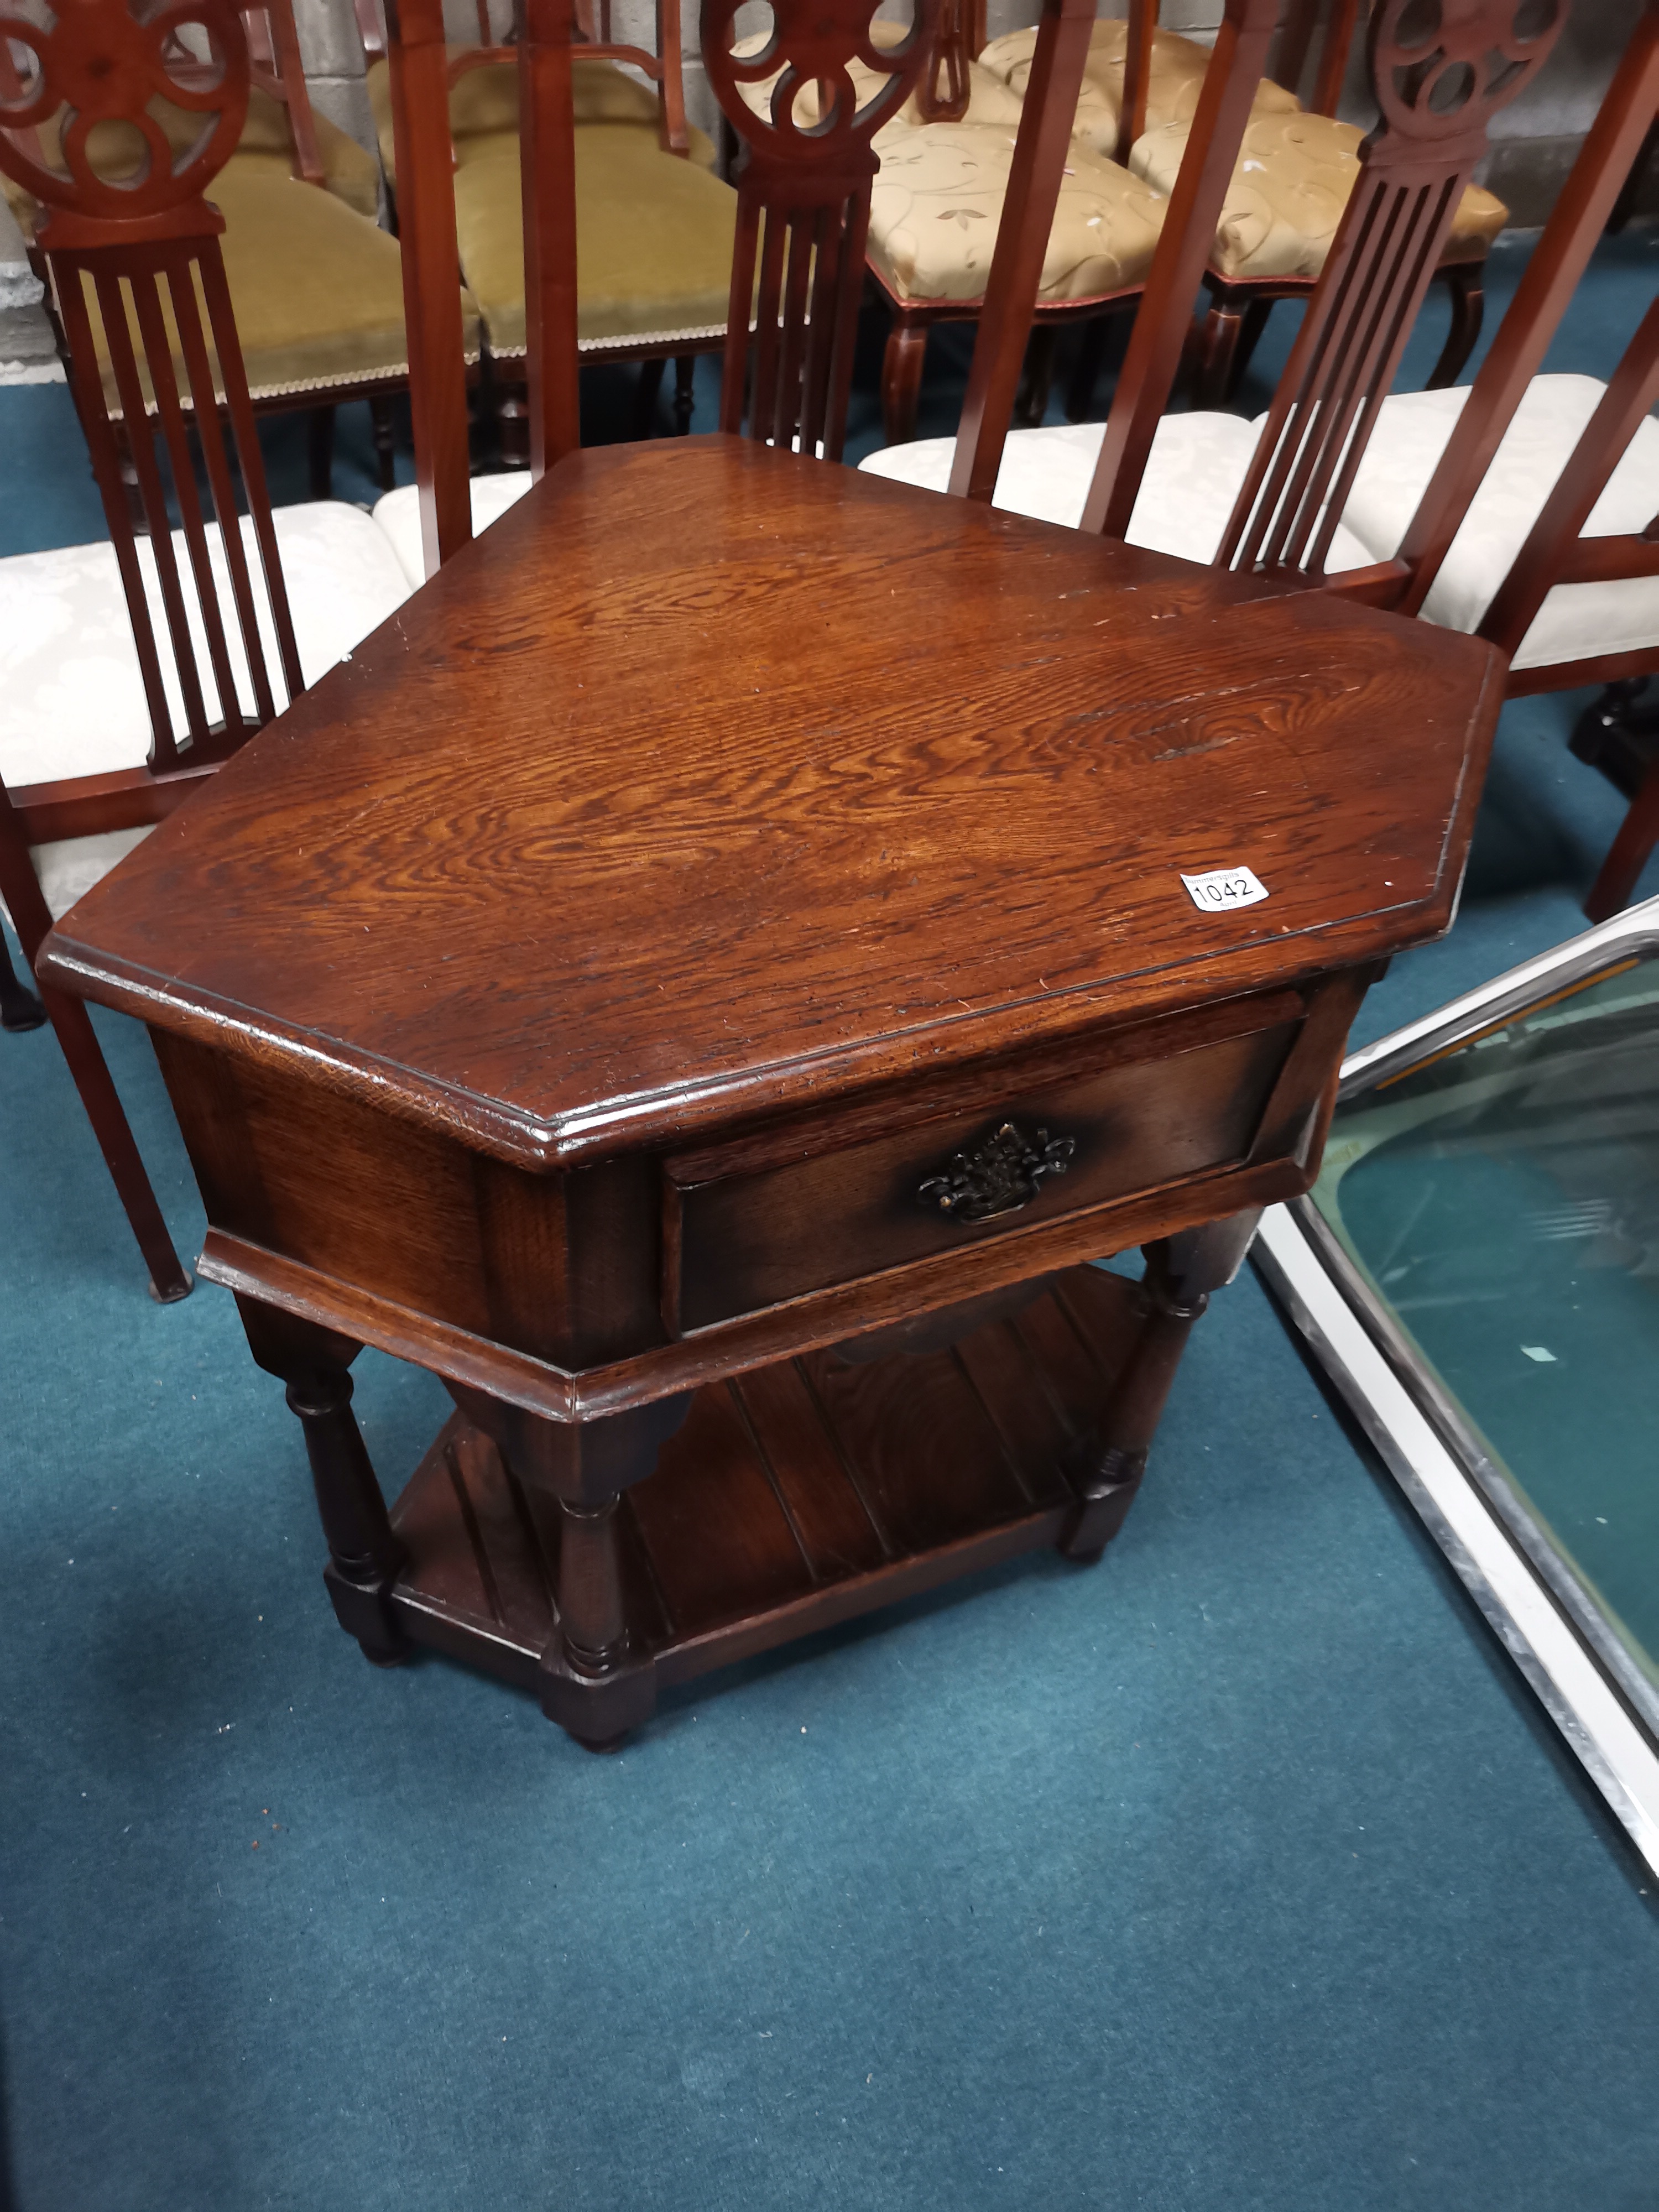 Dark Oak corner table with drawer and shelf under - Image 2 of 2